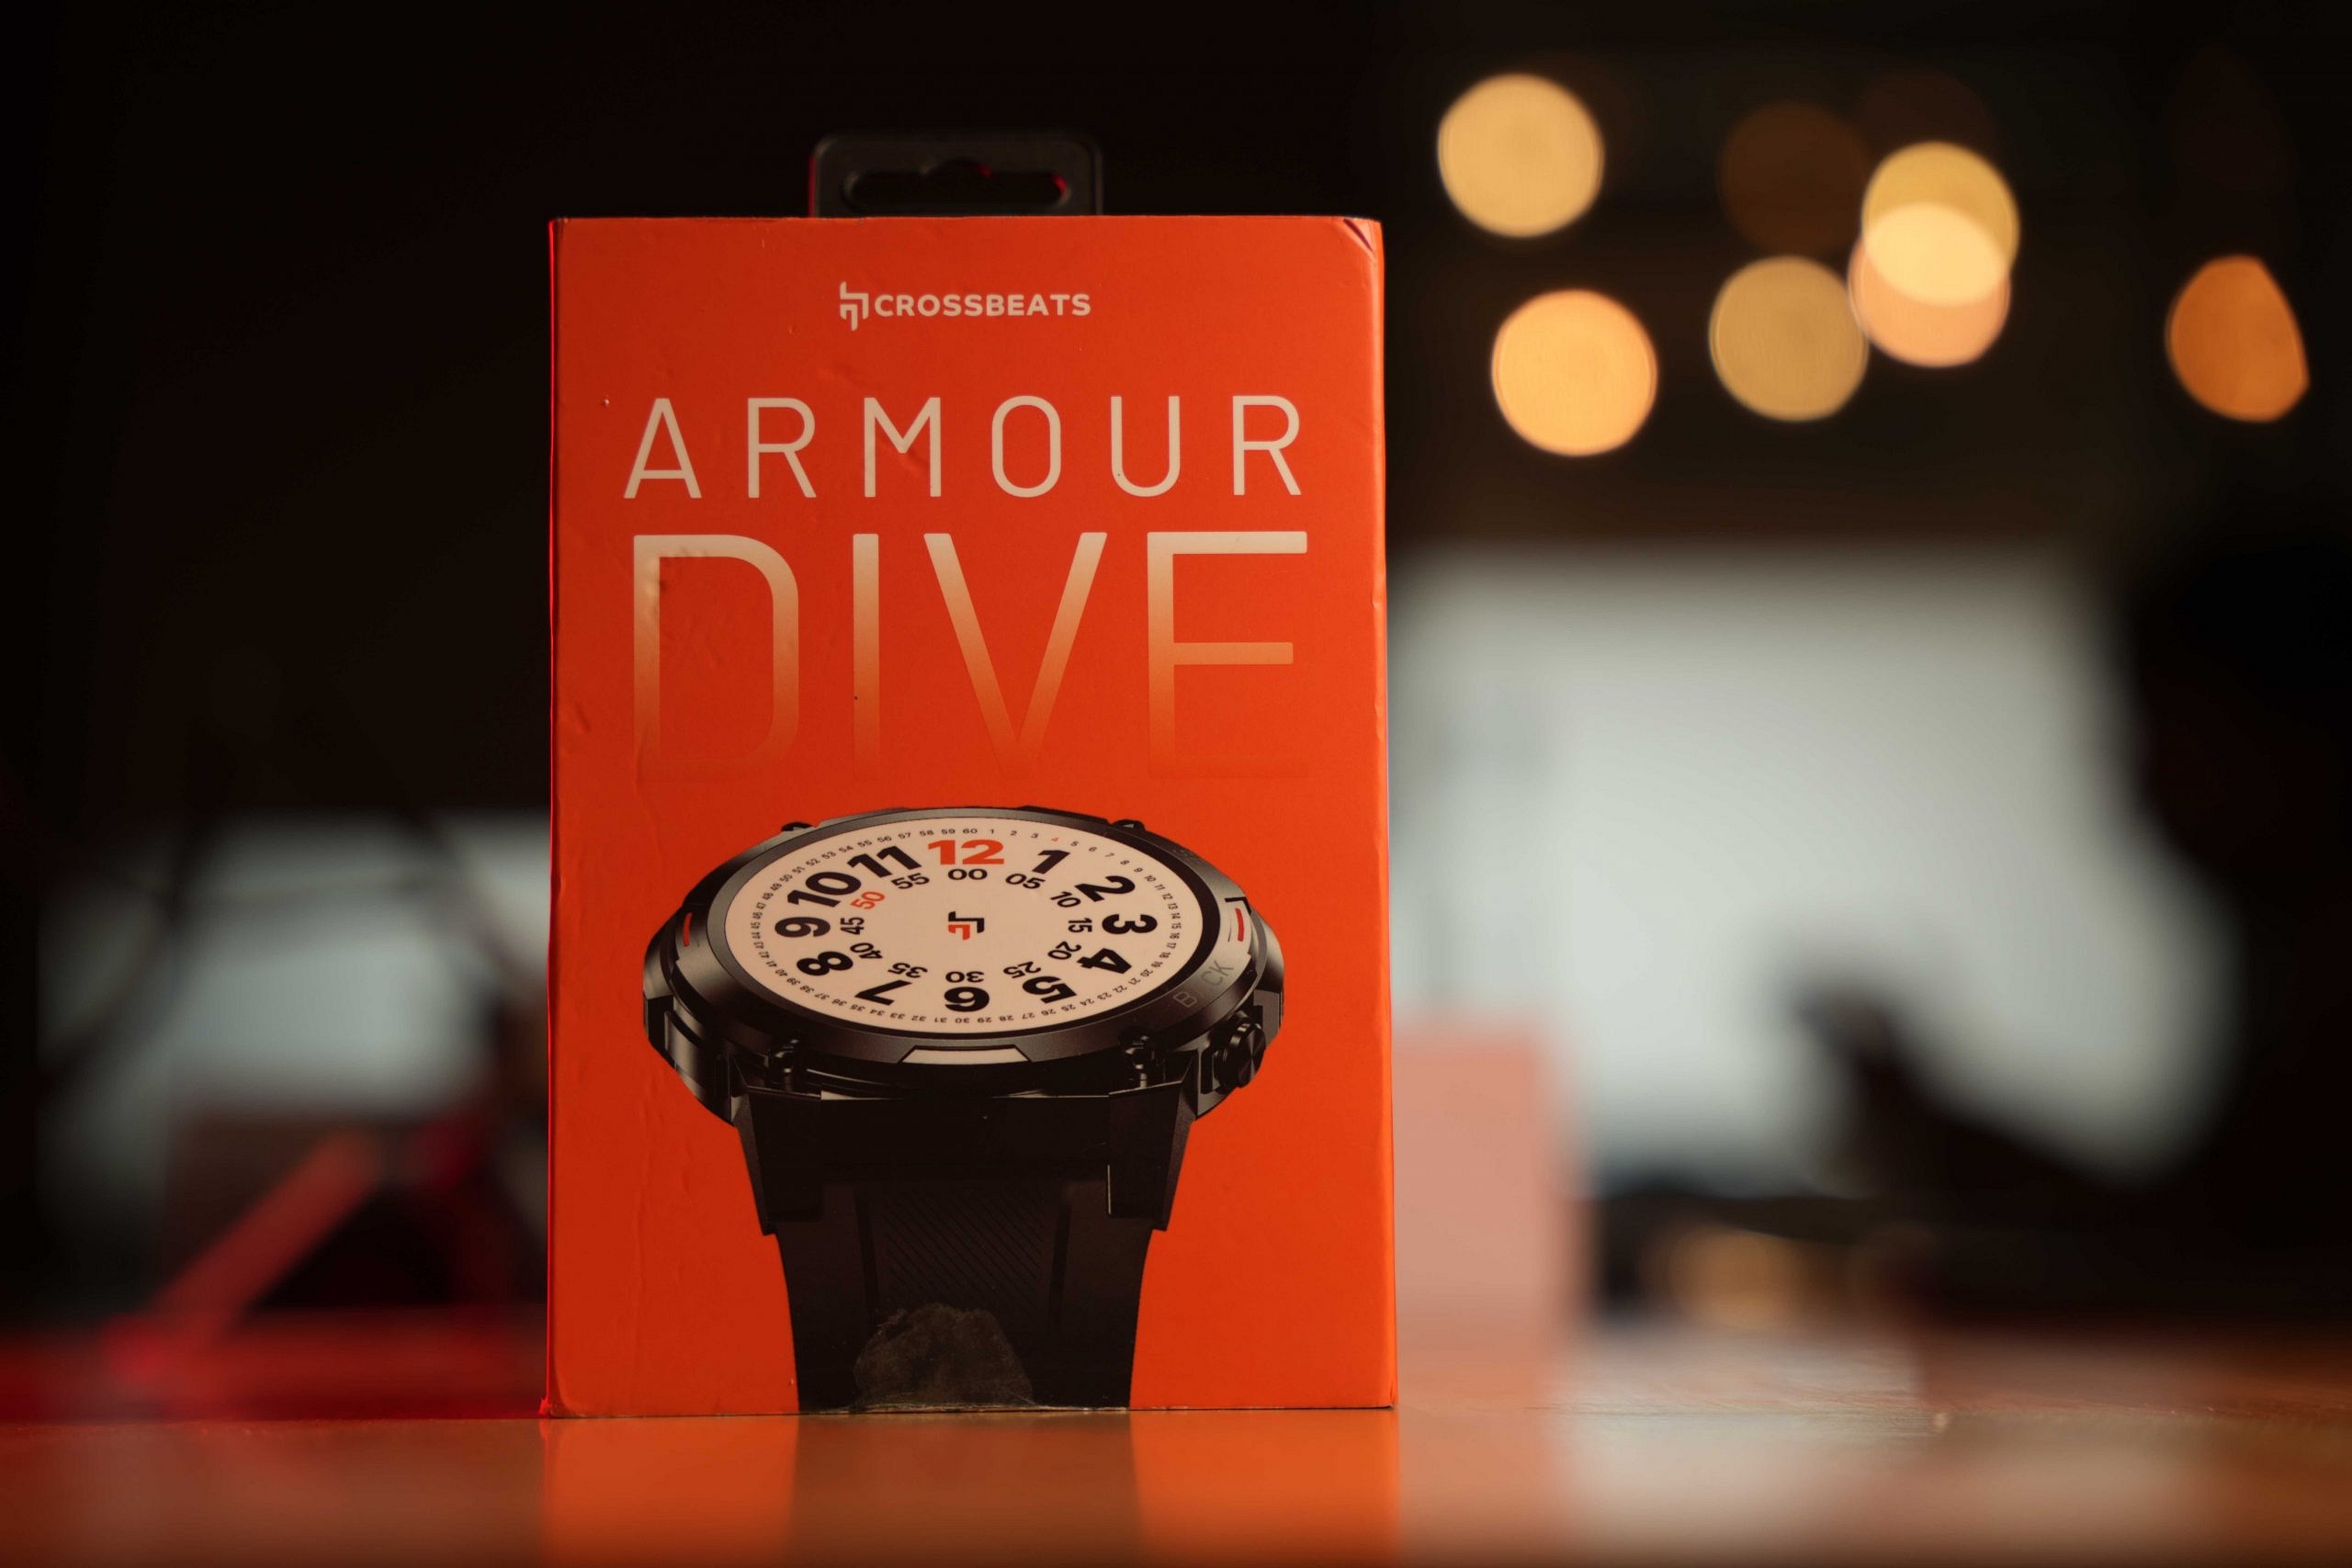 Crossbeats armour dive smartwatch